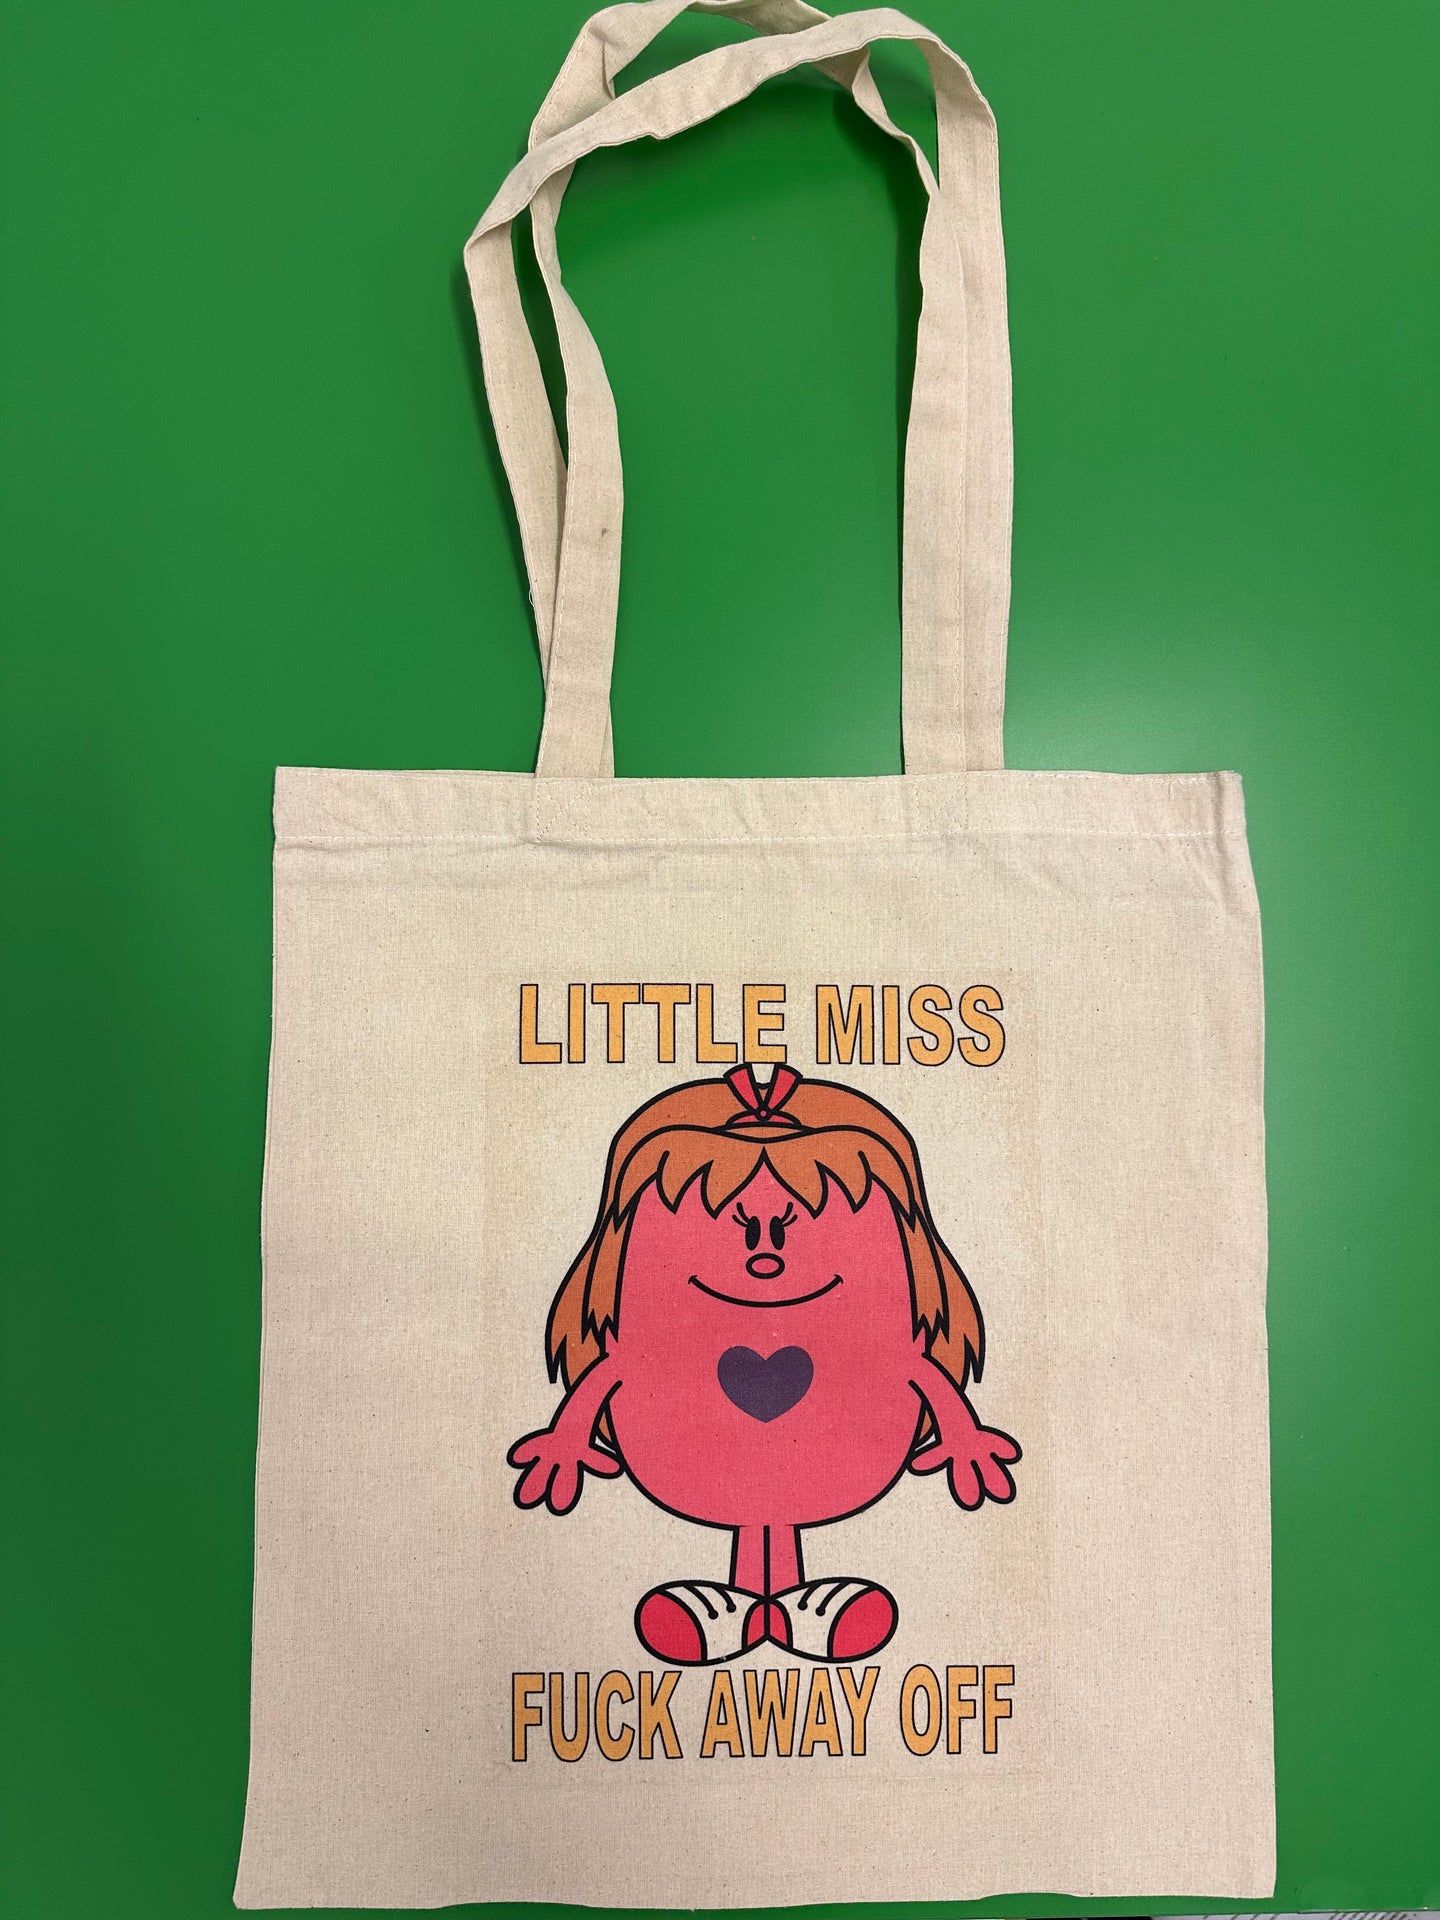 Little Miss F##k Away Off Tote Bag